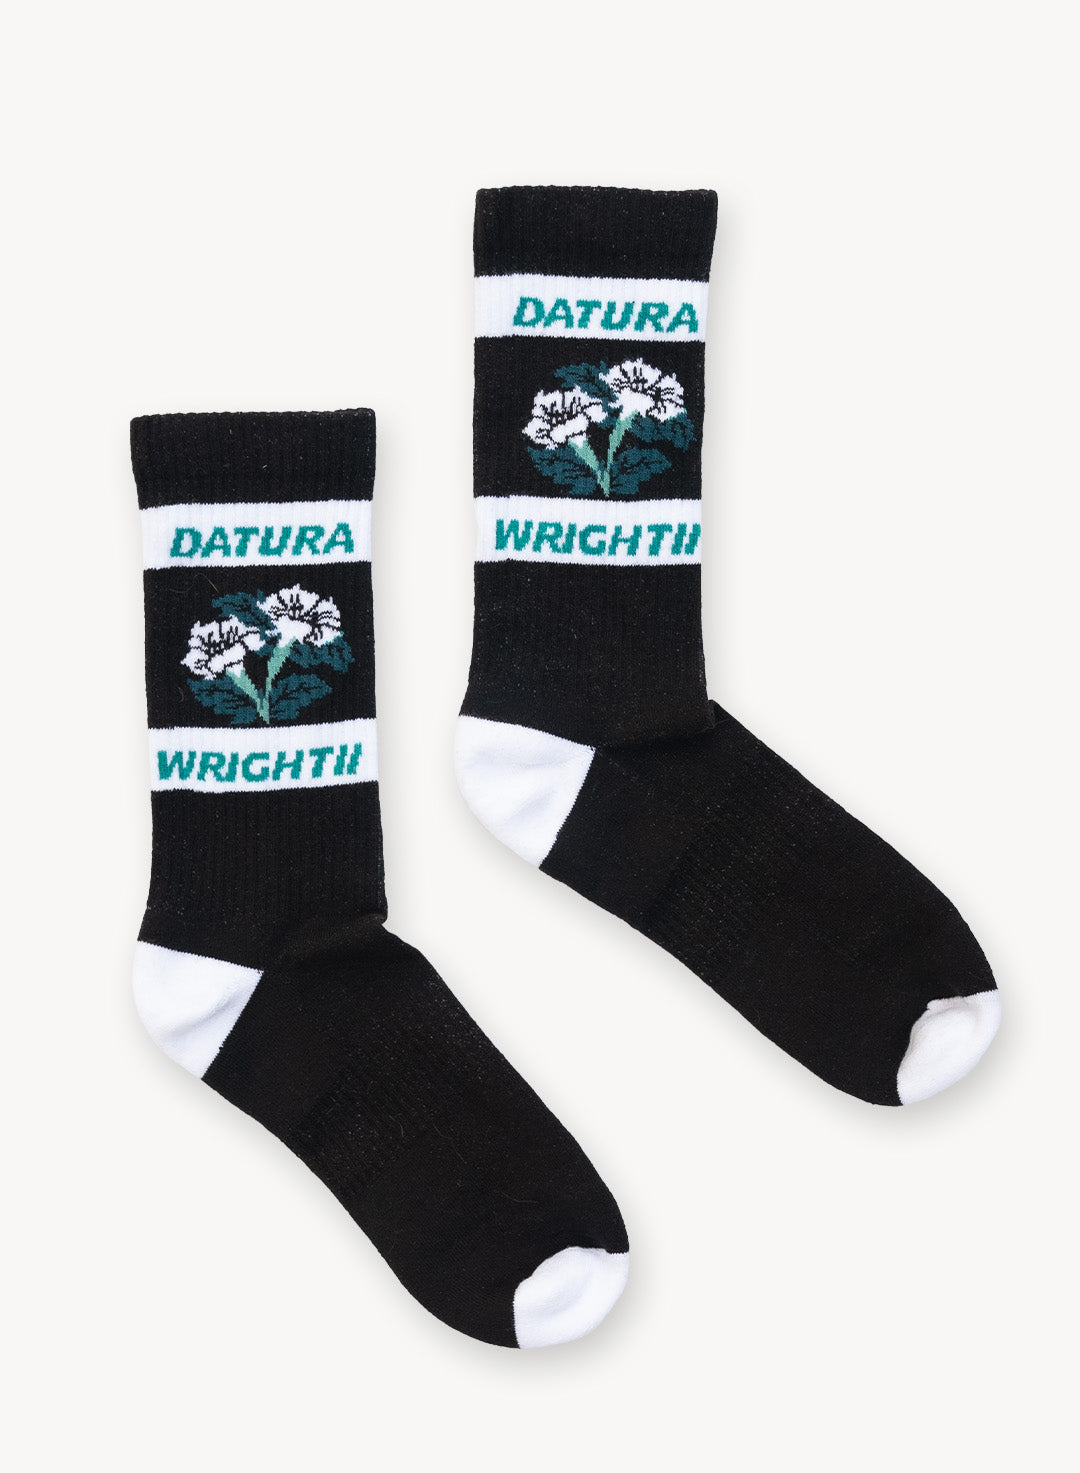 Sacred Datura Socks